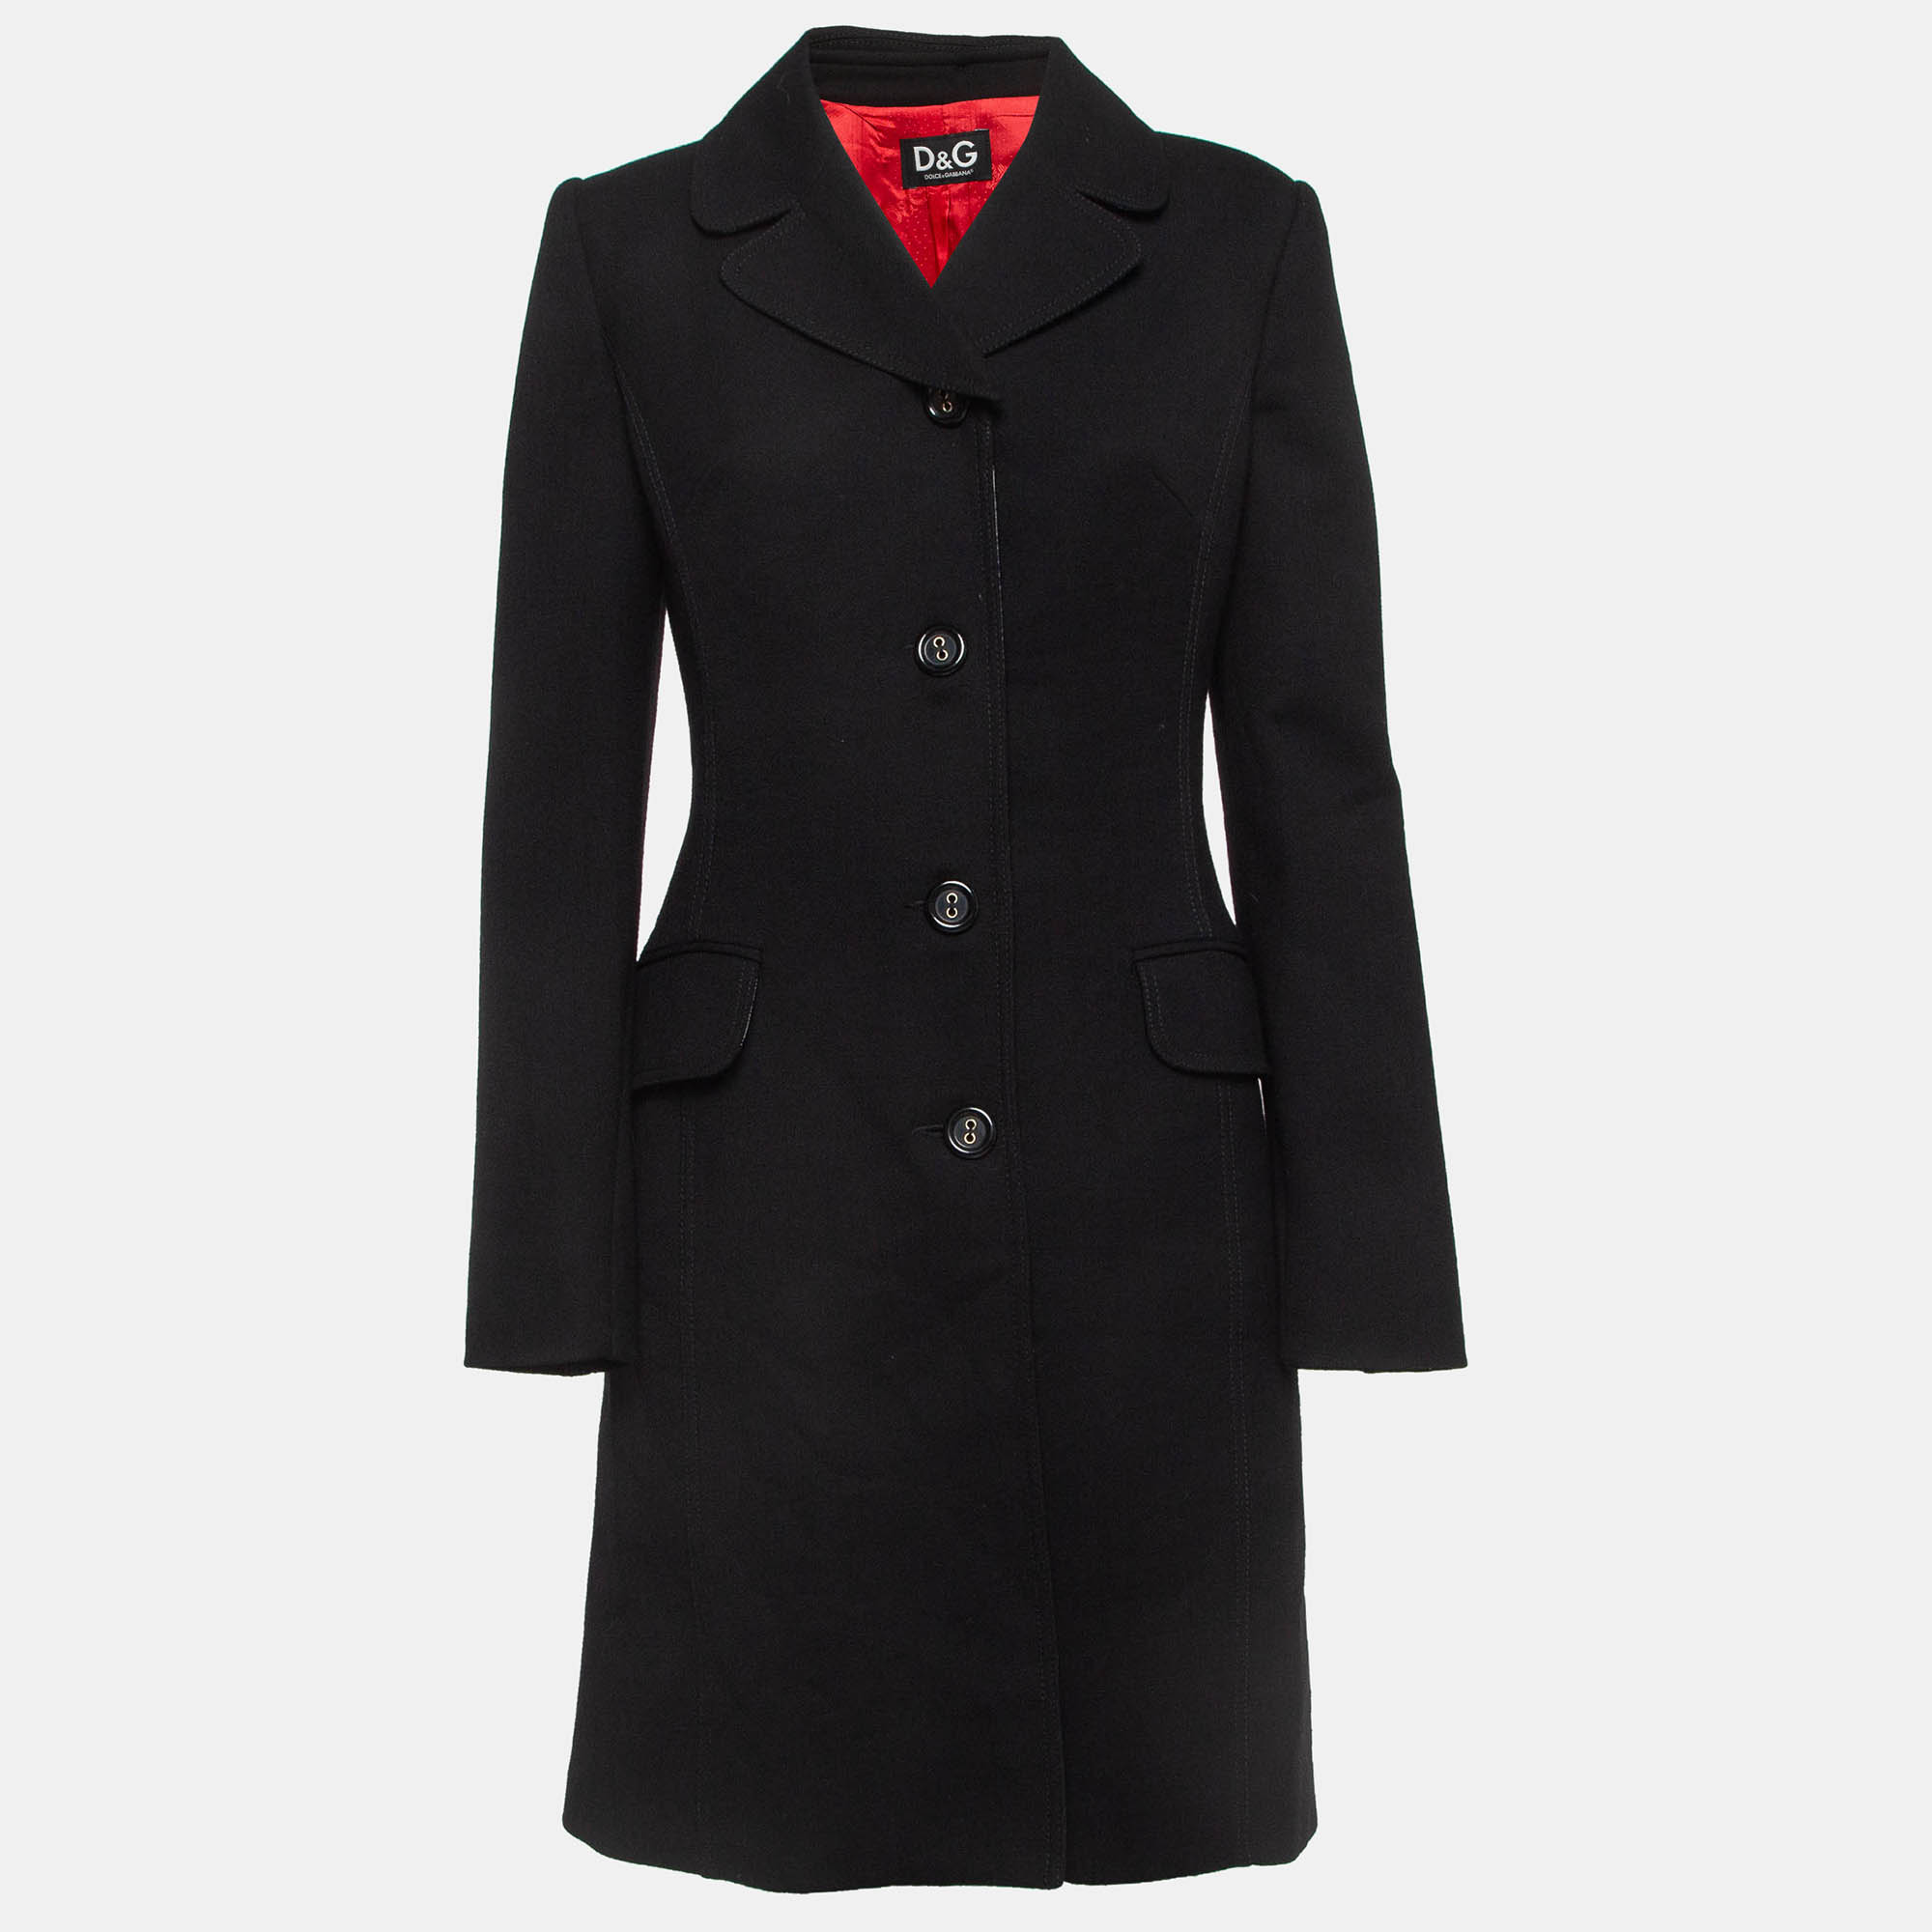 D&g black wool blend single breasted coat s